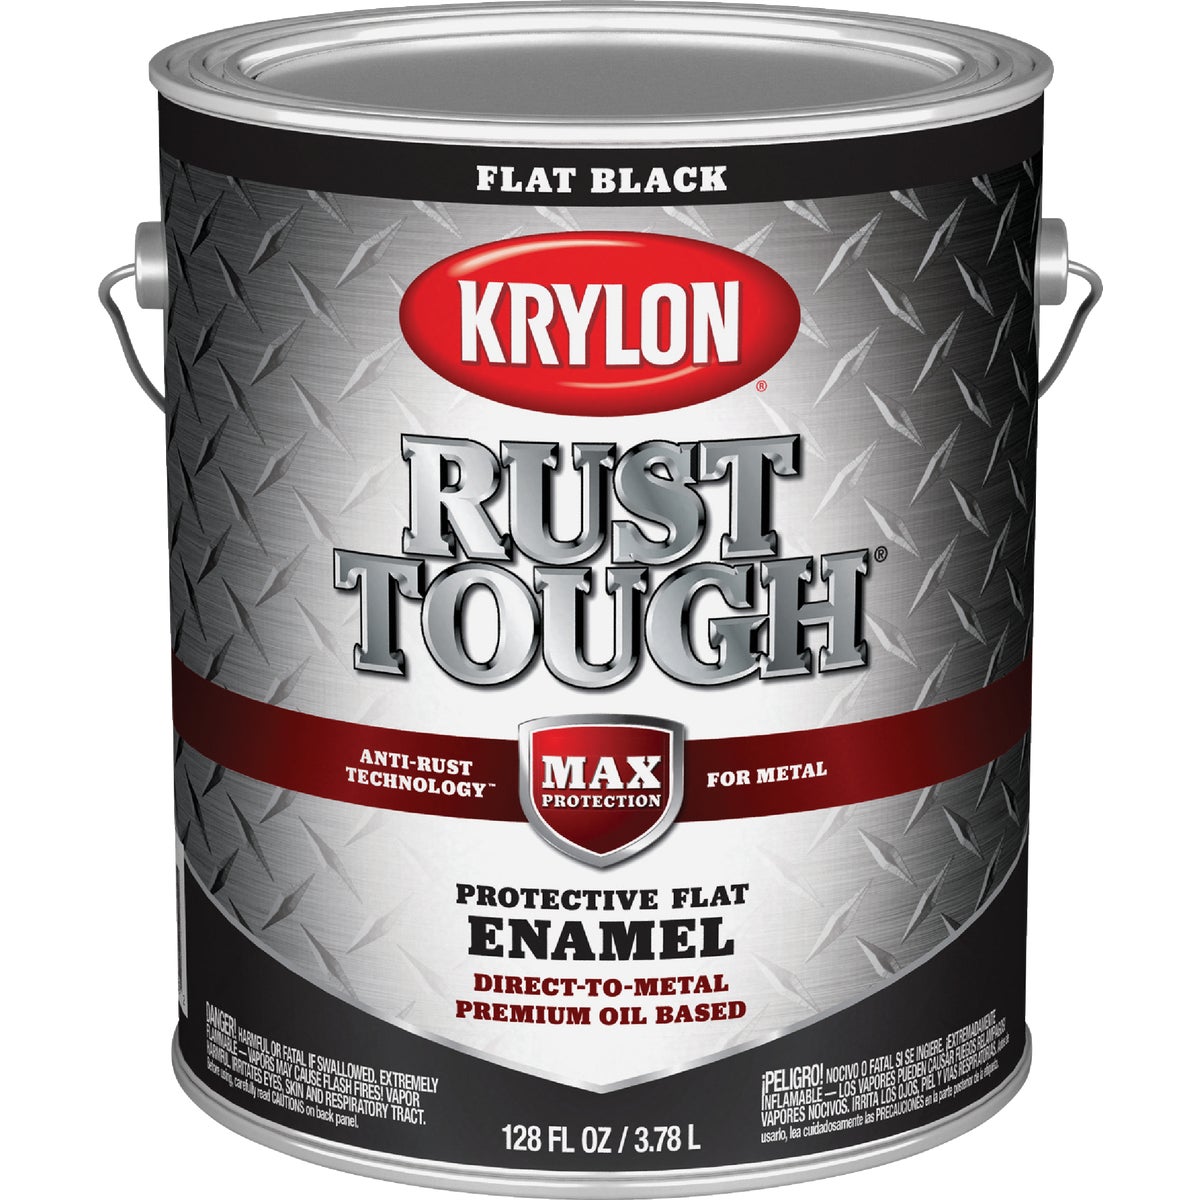 Krylon Rust Tough Oil-Based Flat Rust Control Enamel, Black, 1 Gal.